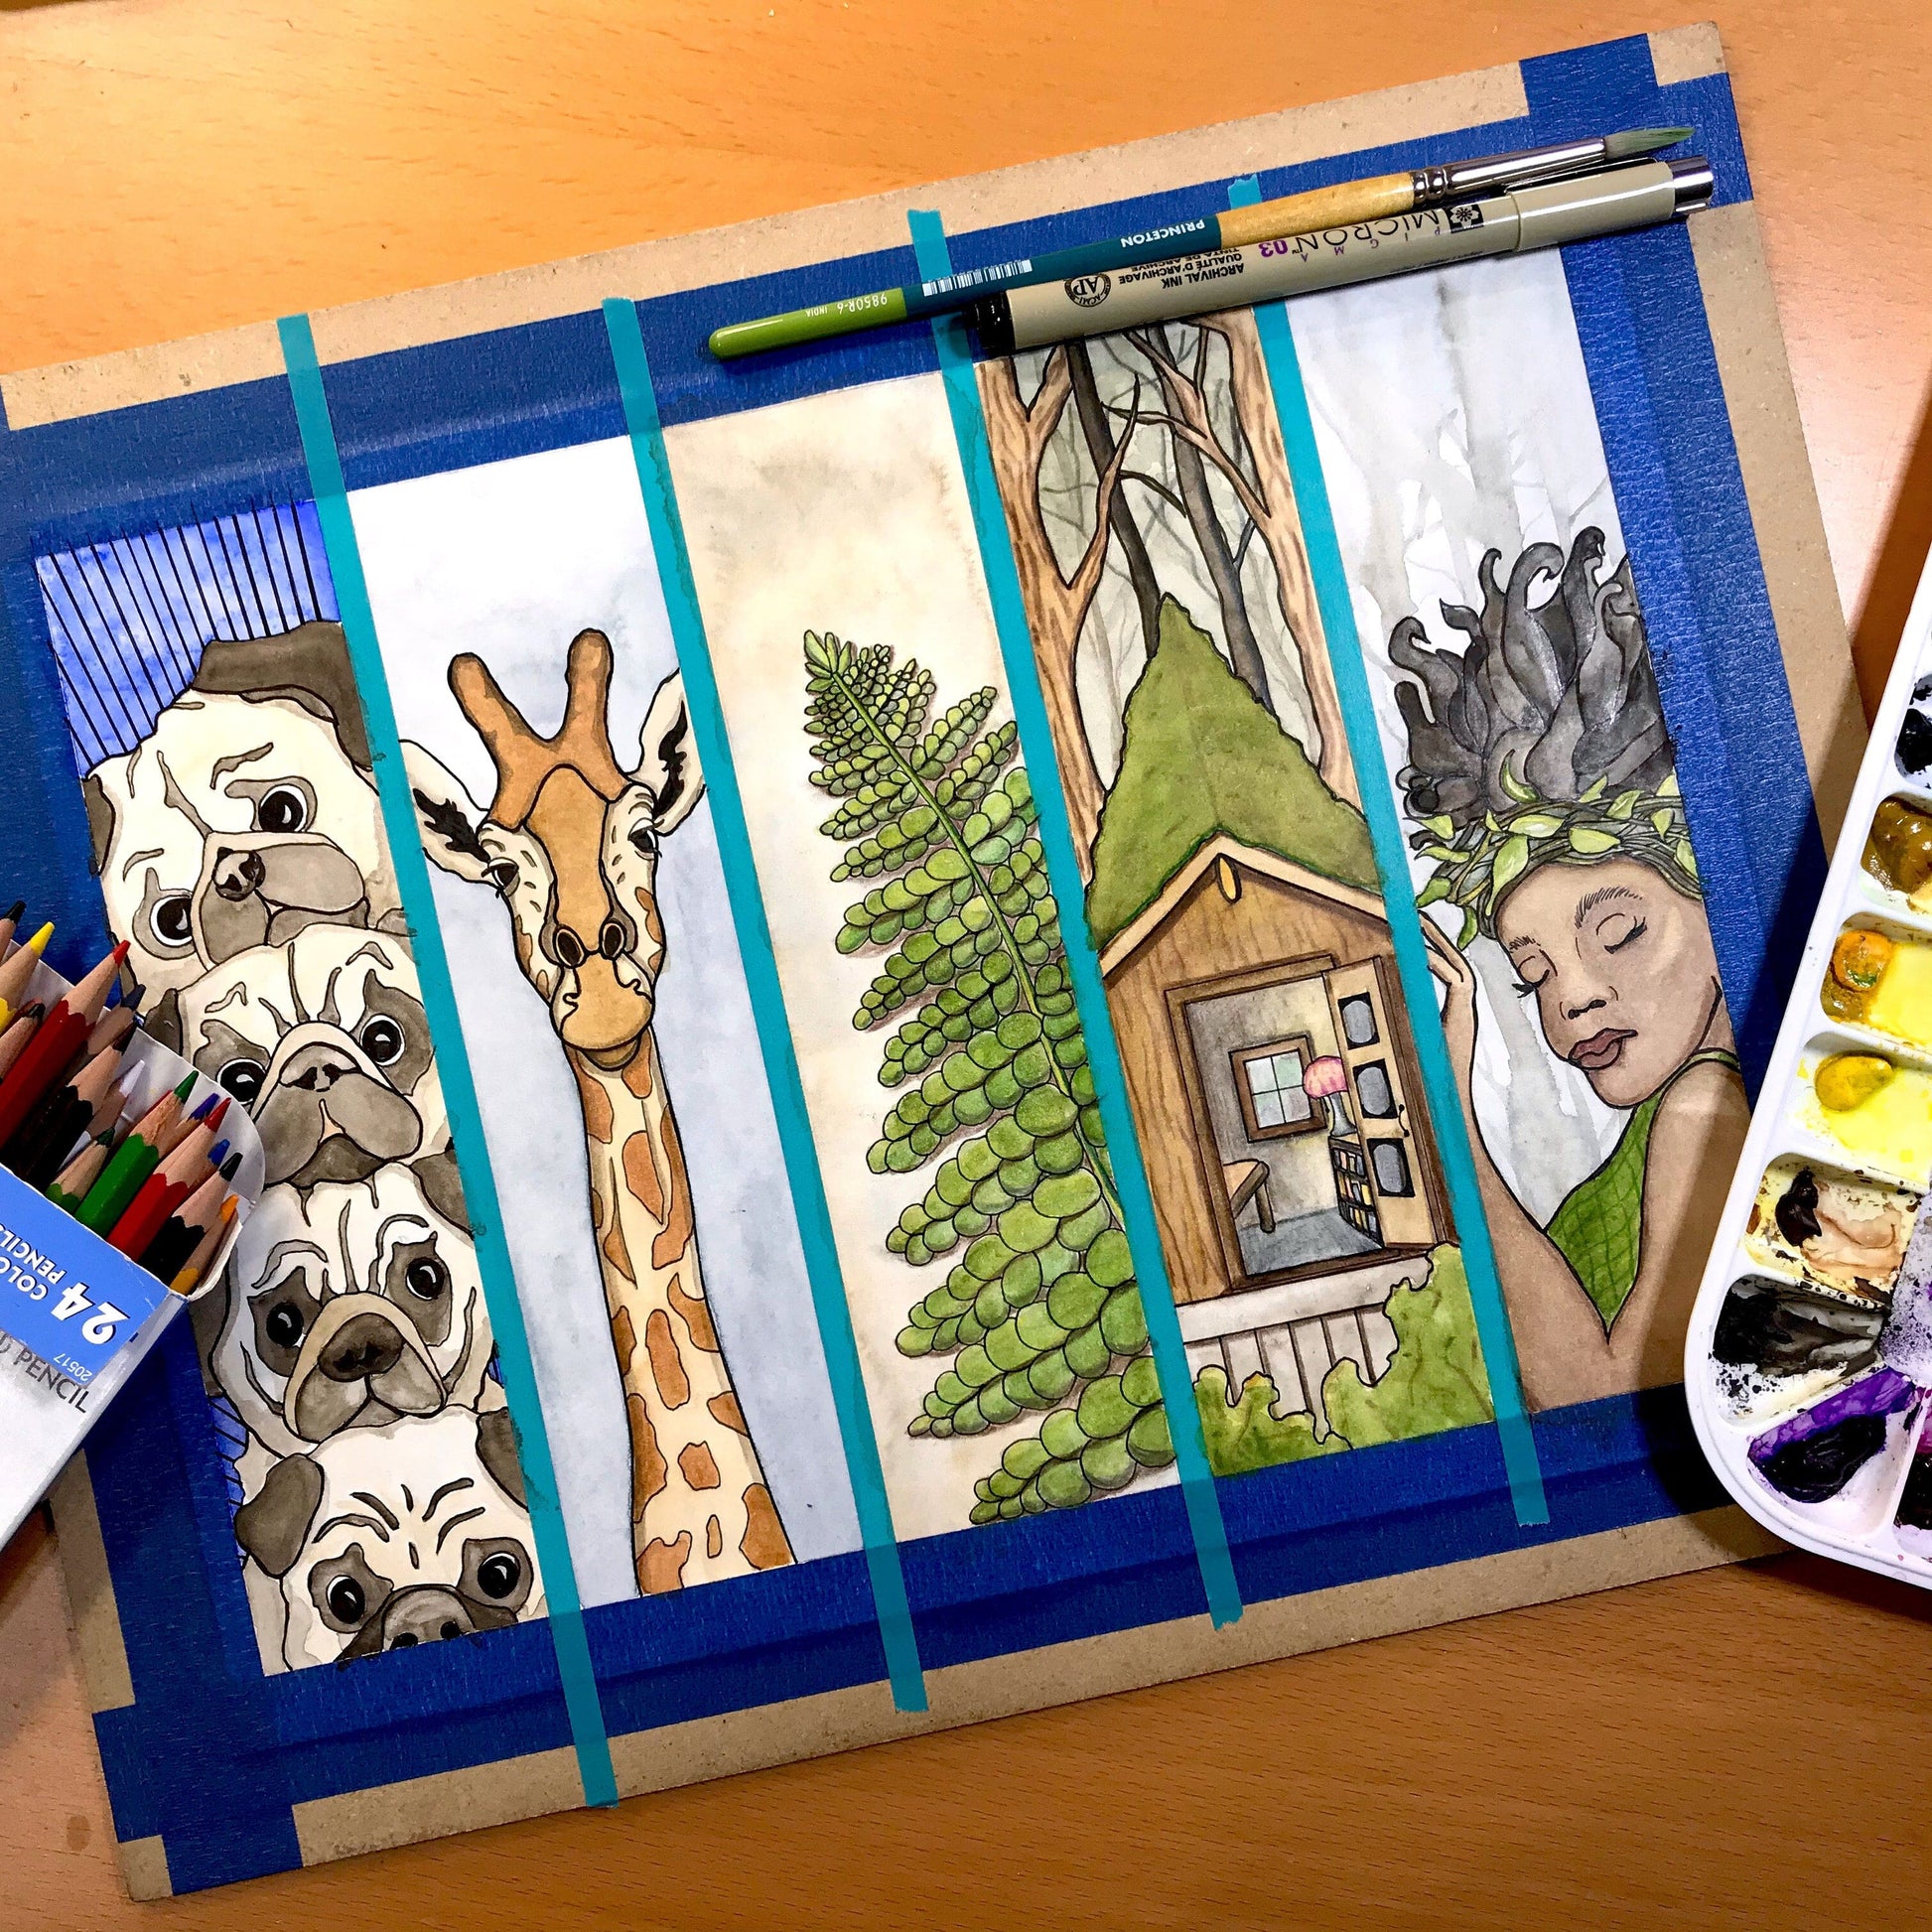 PinkPolish Design Original Art "Bookmark Sheet, Pugs, Giraffe, Fern, Hut & Forrest Nymph" - Original Watercolor & Ink Illustration